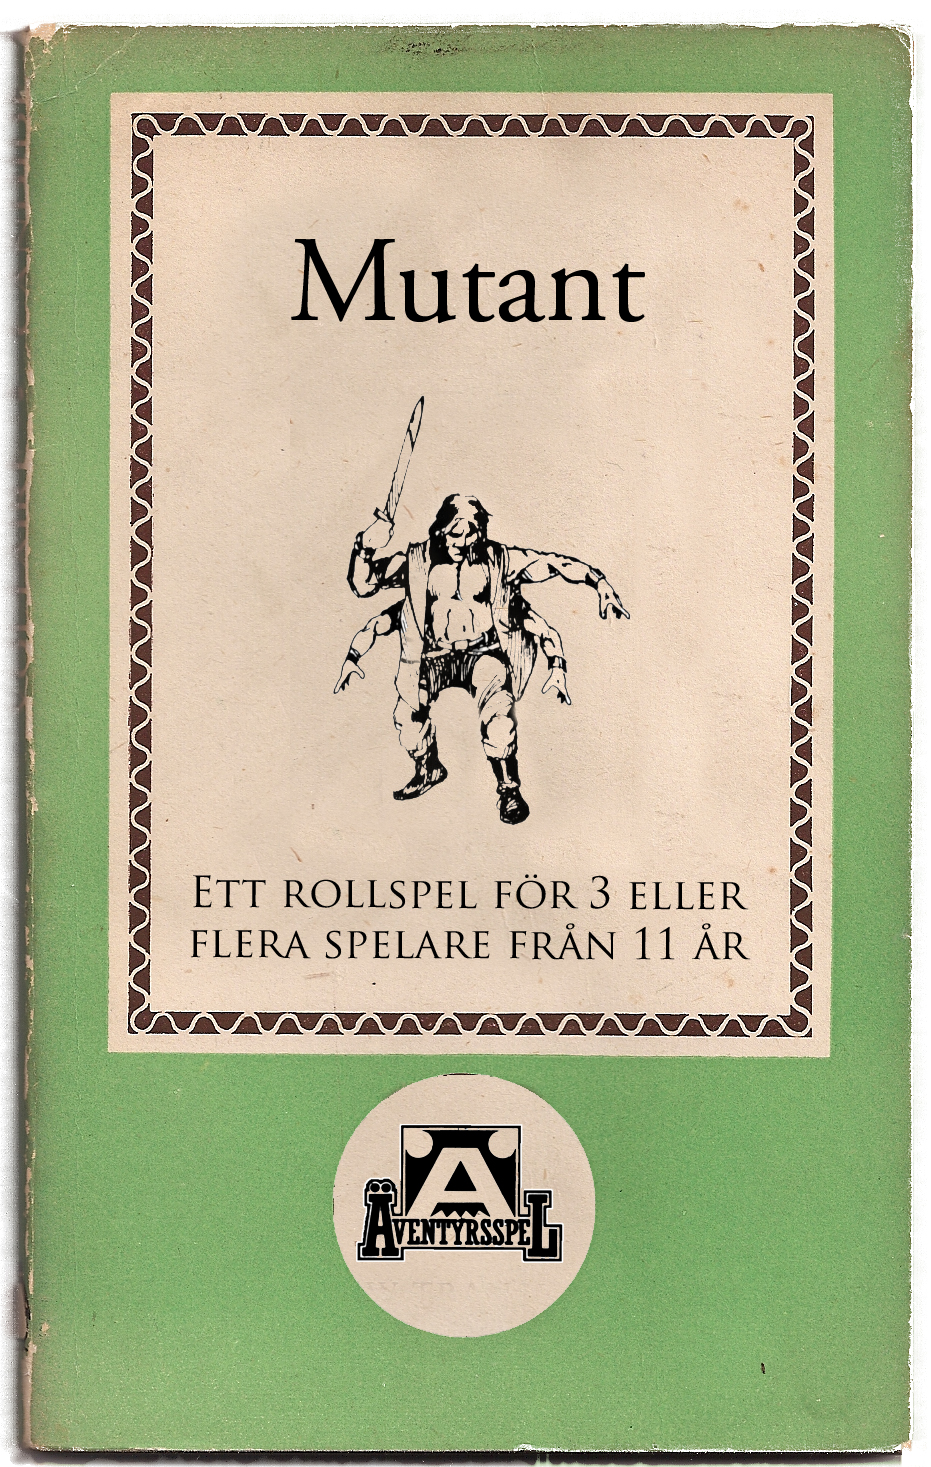 mutant1971